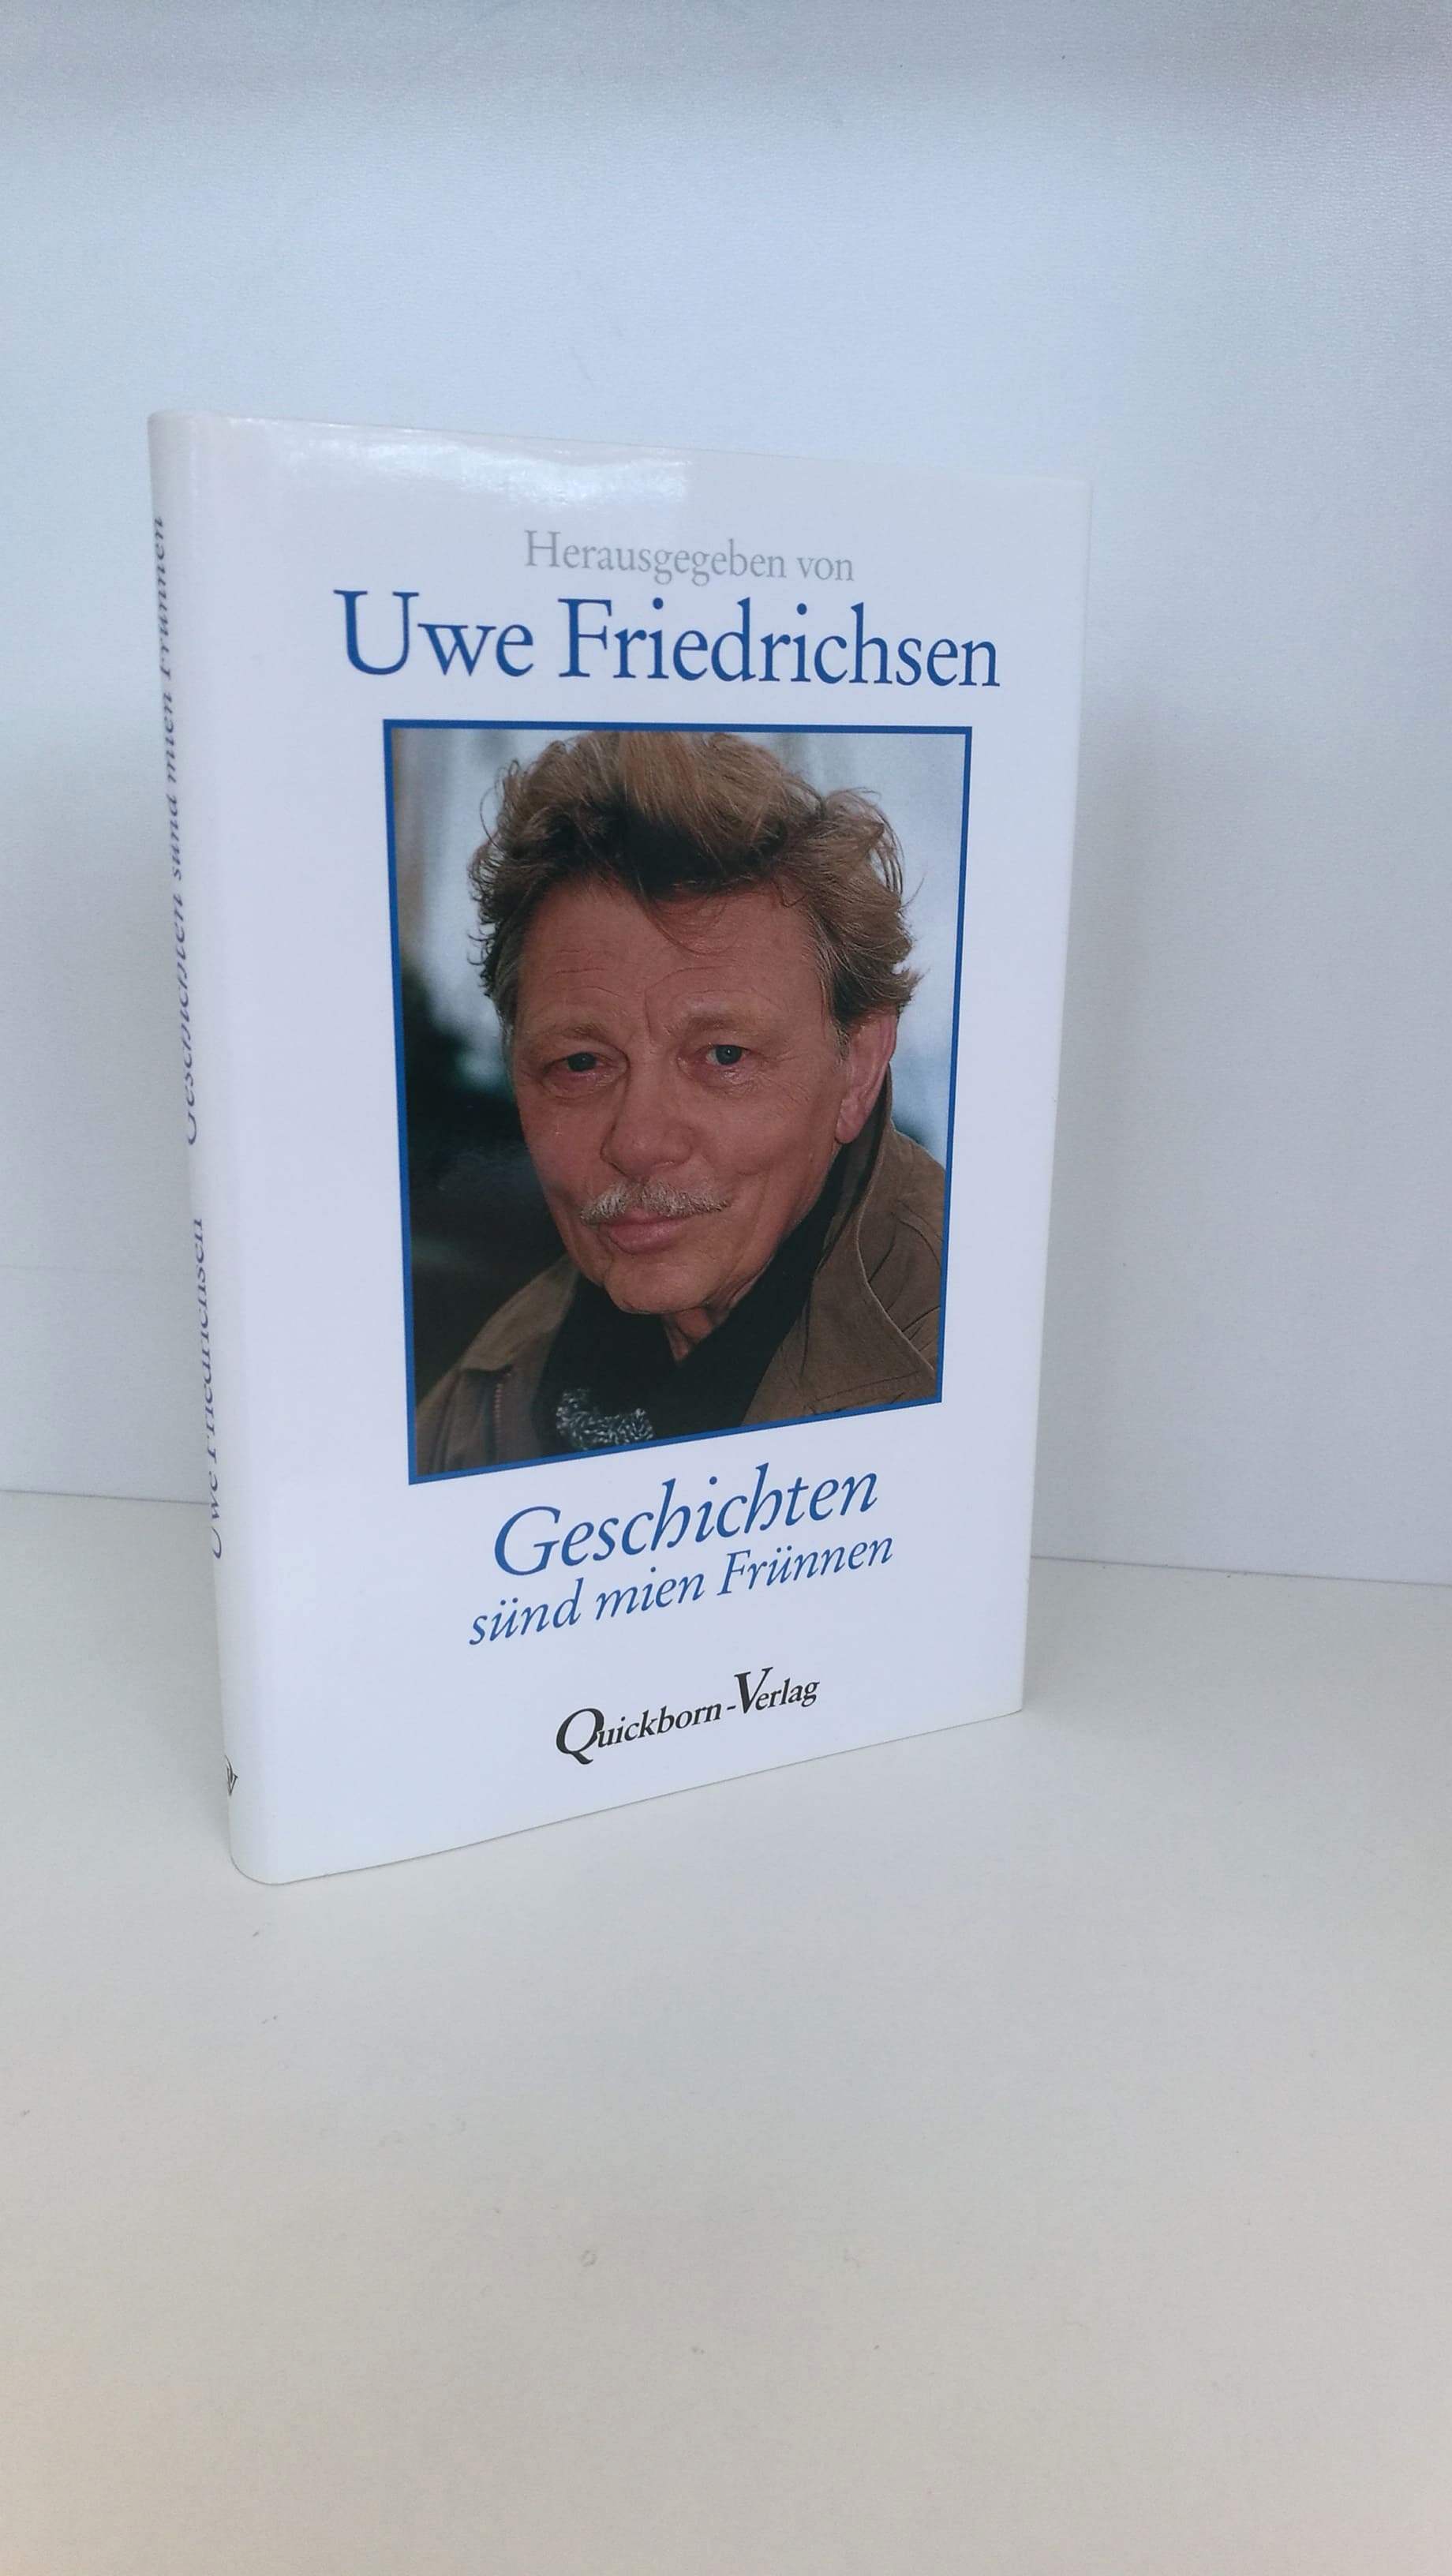 Geschichten sünd mien Frünnen - Uwe Friedrichsen (Hrsg.)